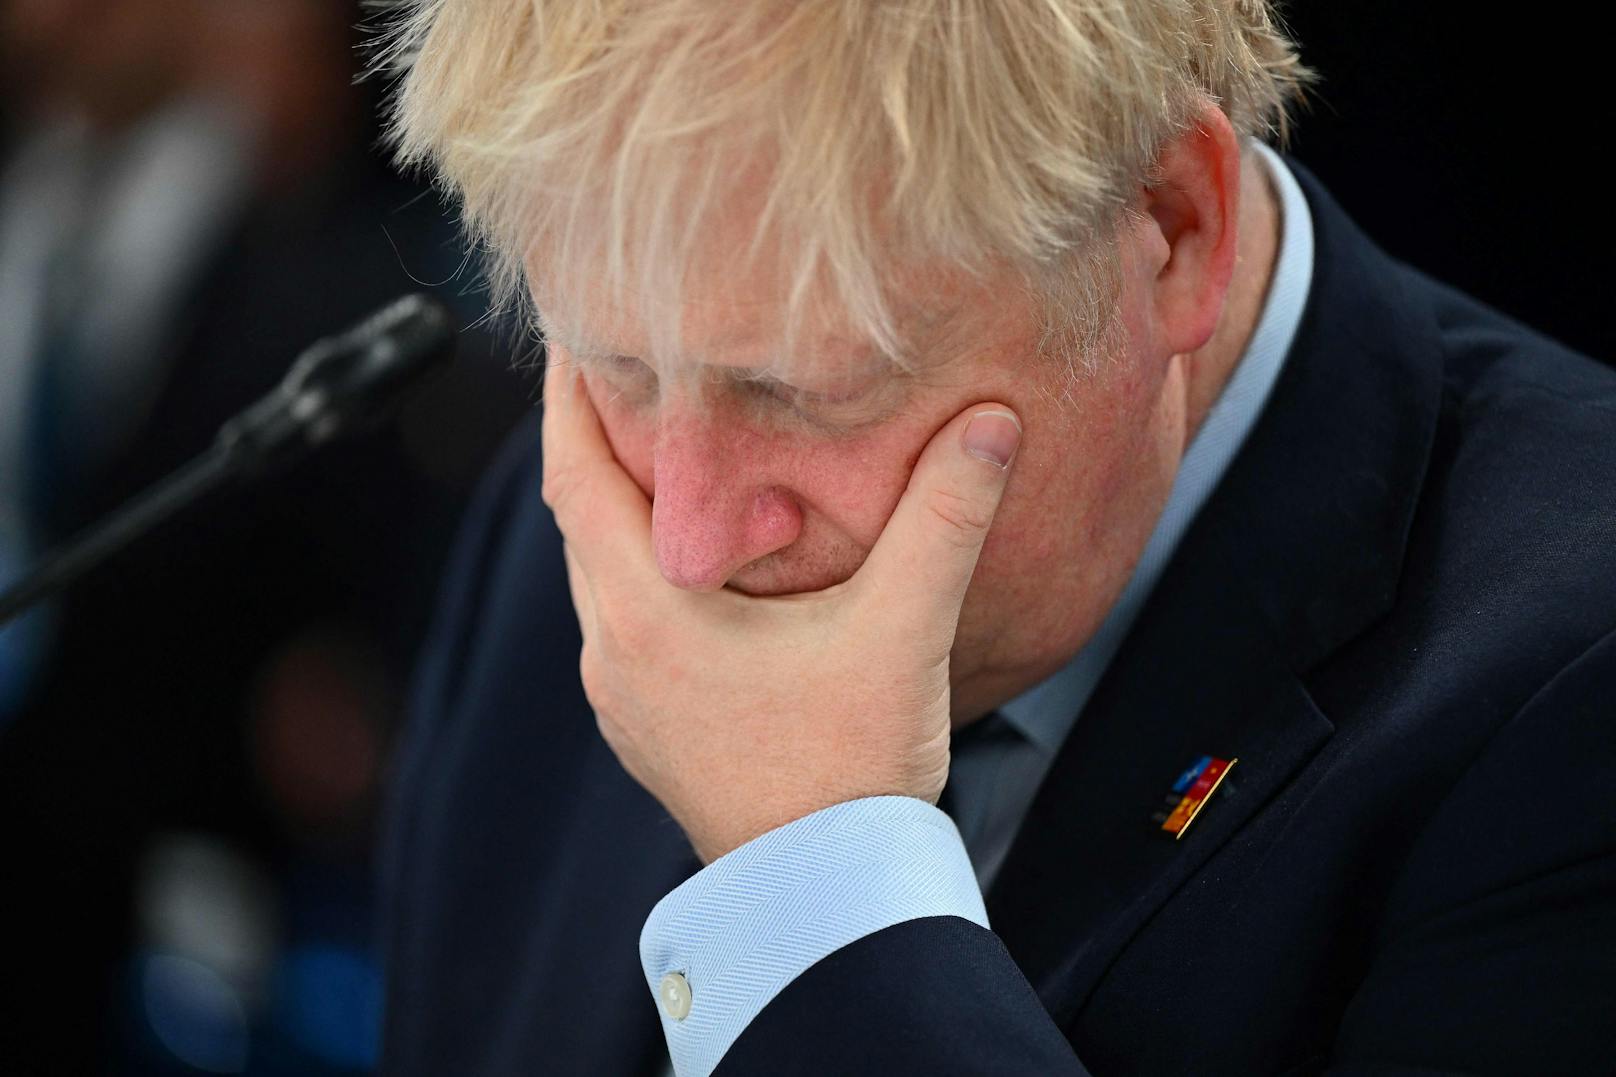 Kein Comeback – Boris Johnson zieht Kandidatur zurück